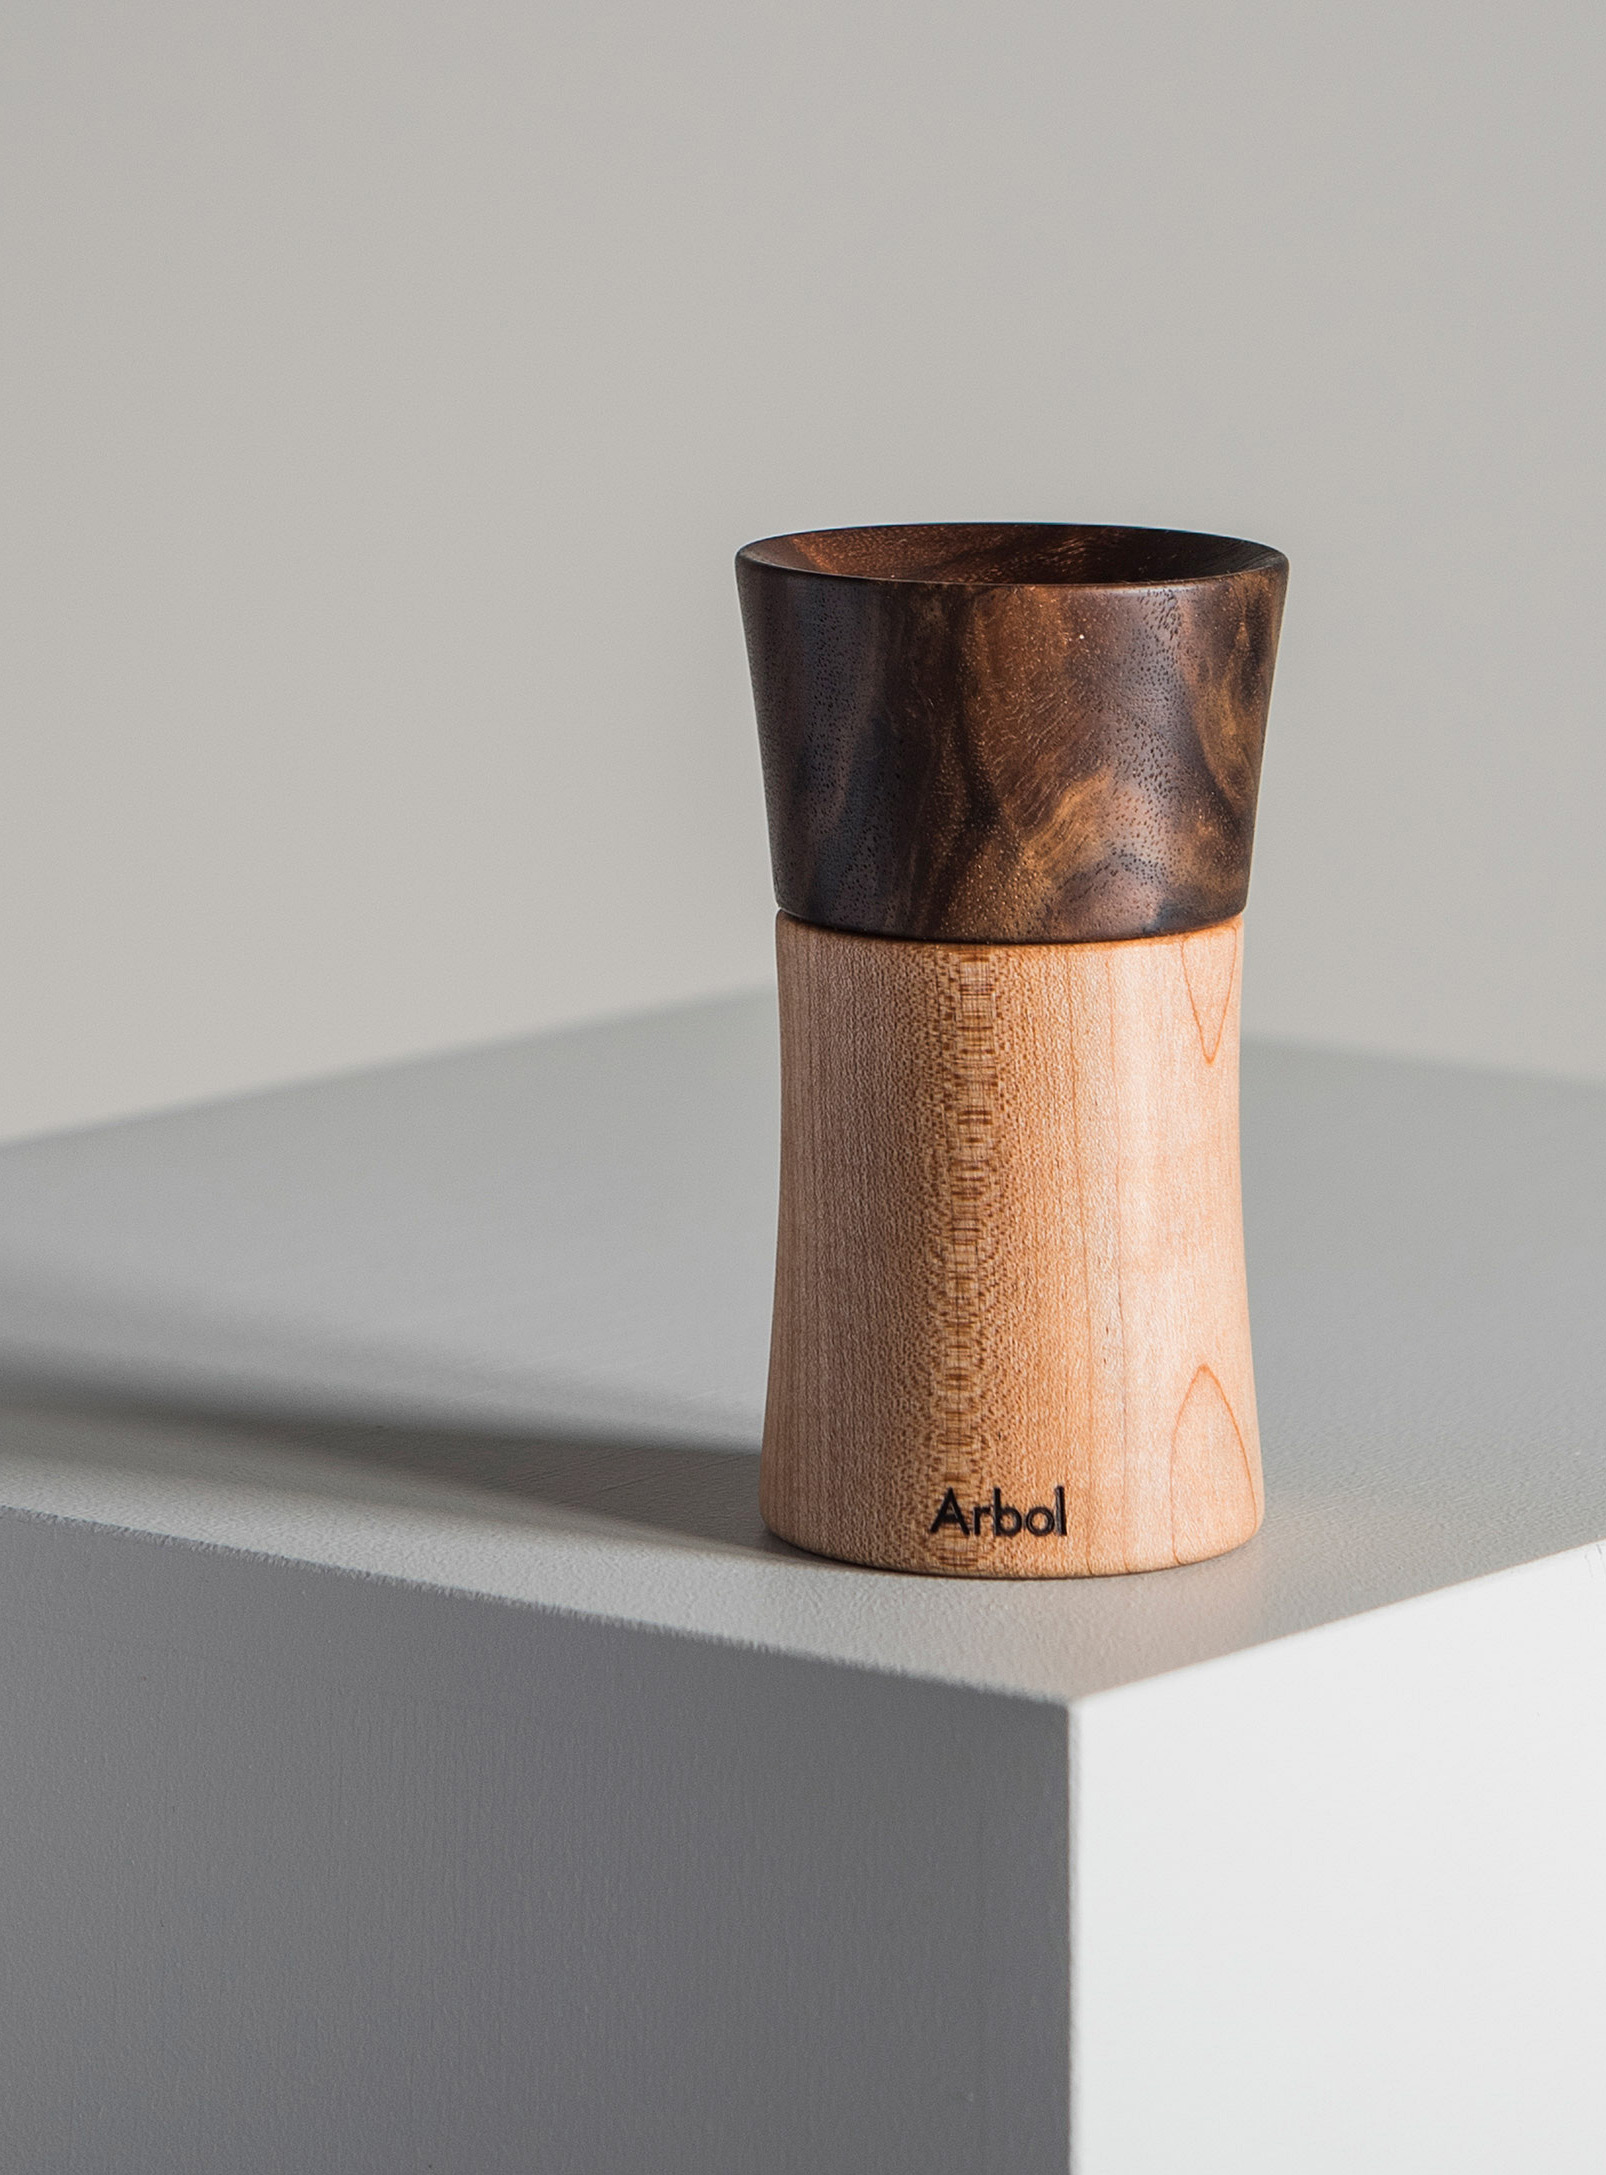 Arbol - Spice grinder